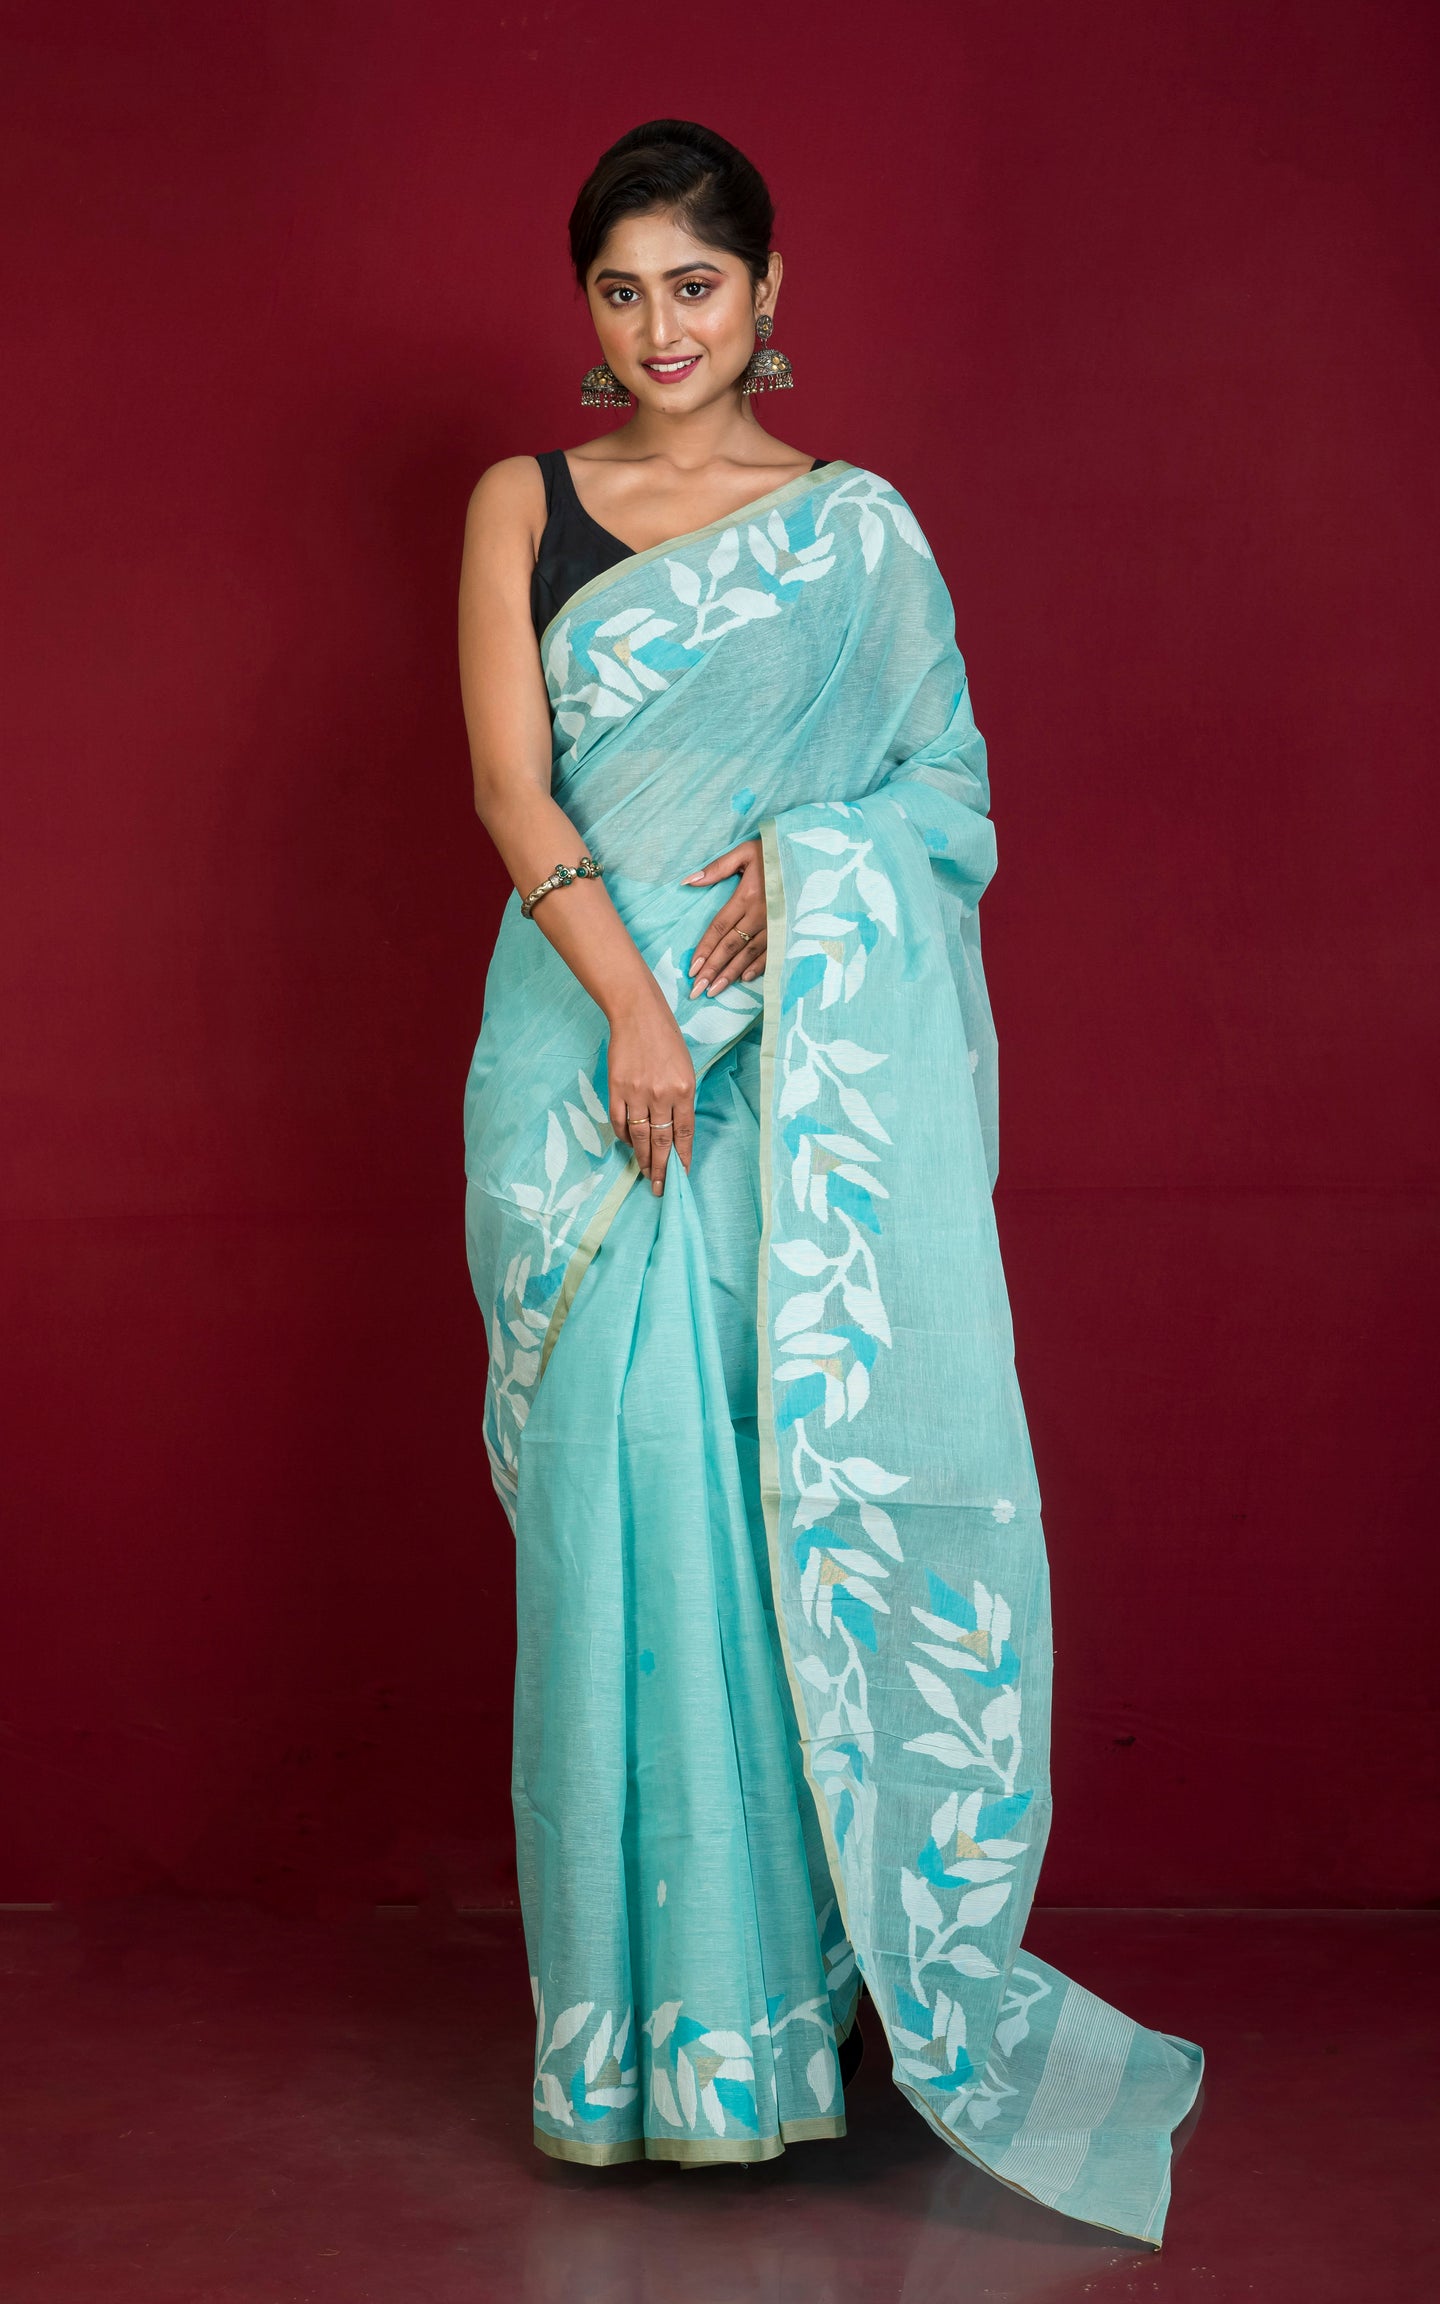 Premium Quality Hand Work Cotton Dhakai Jamdani Saree in Light Turquoise, Sky Blue, Off White and Gold